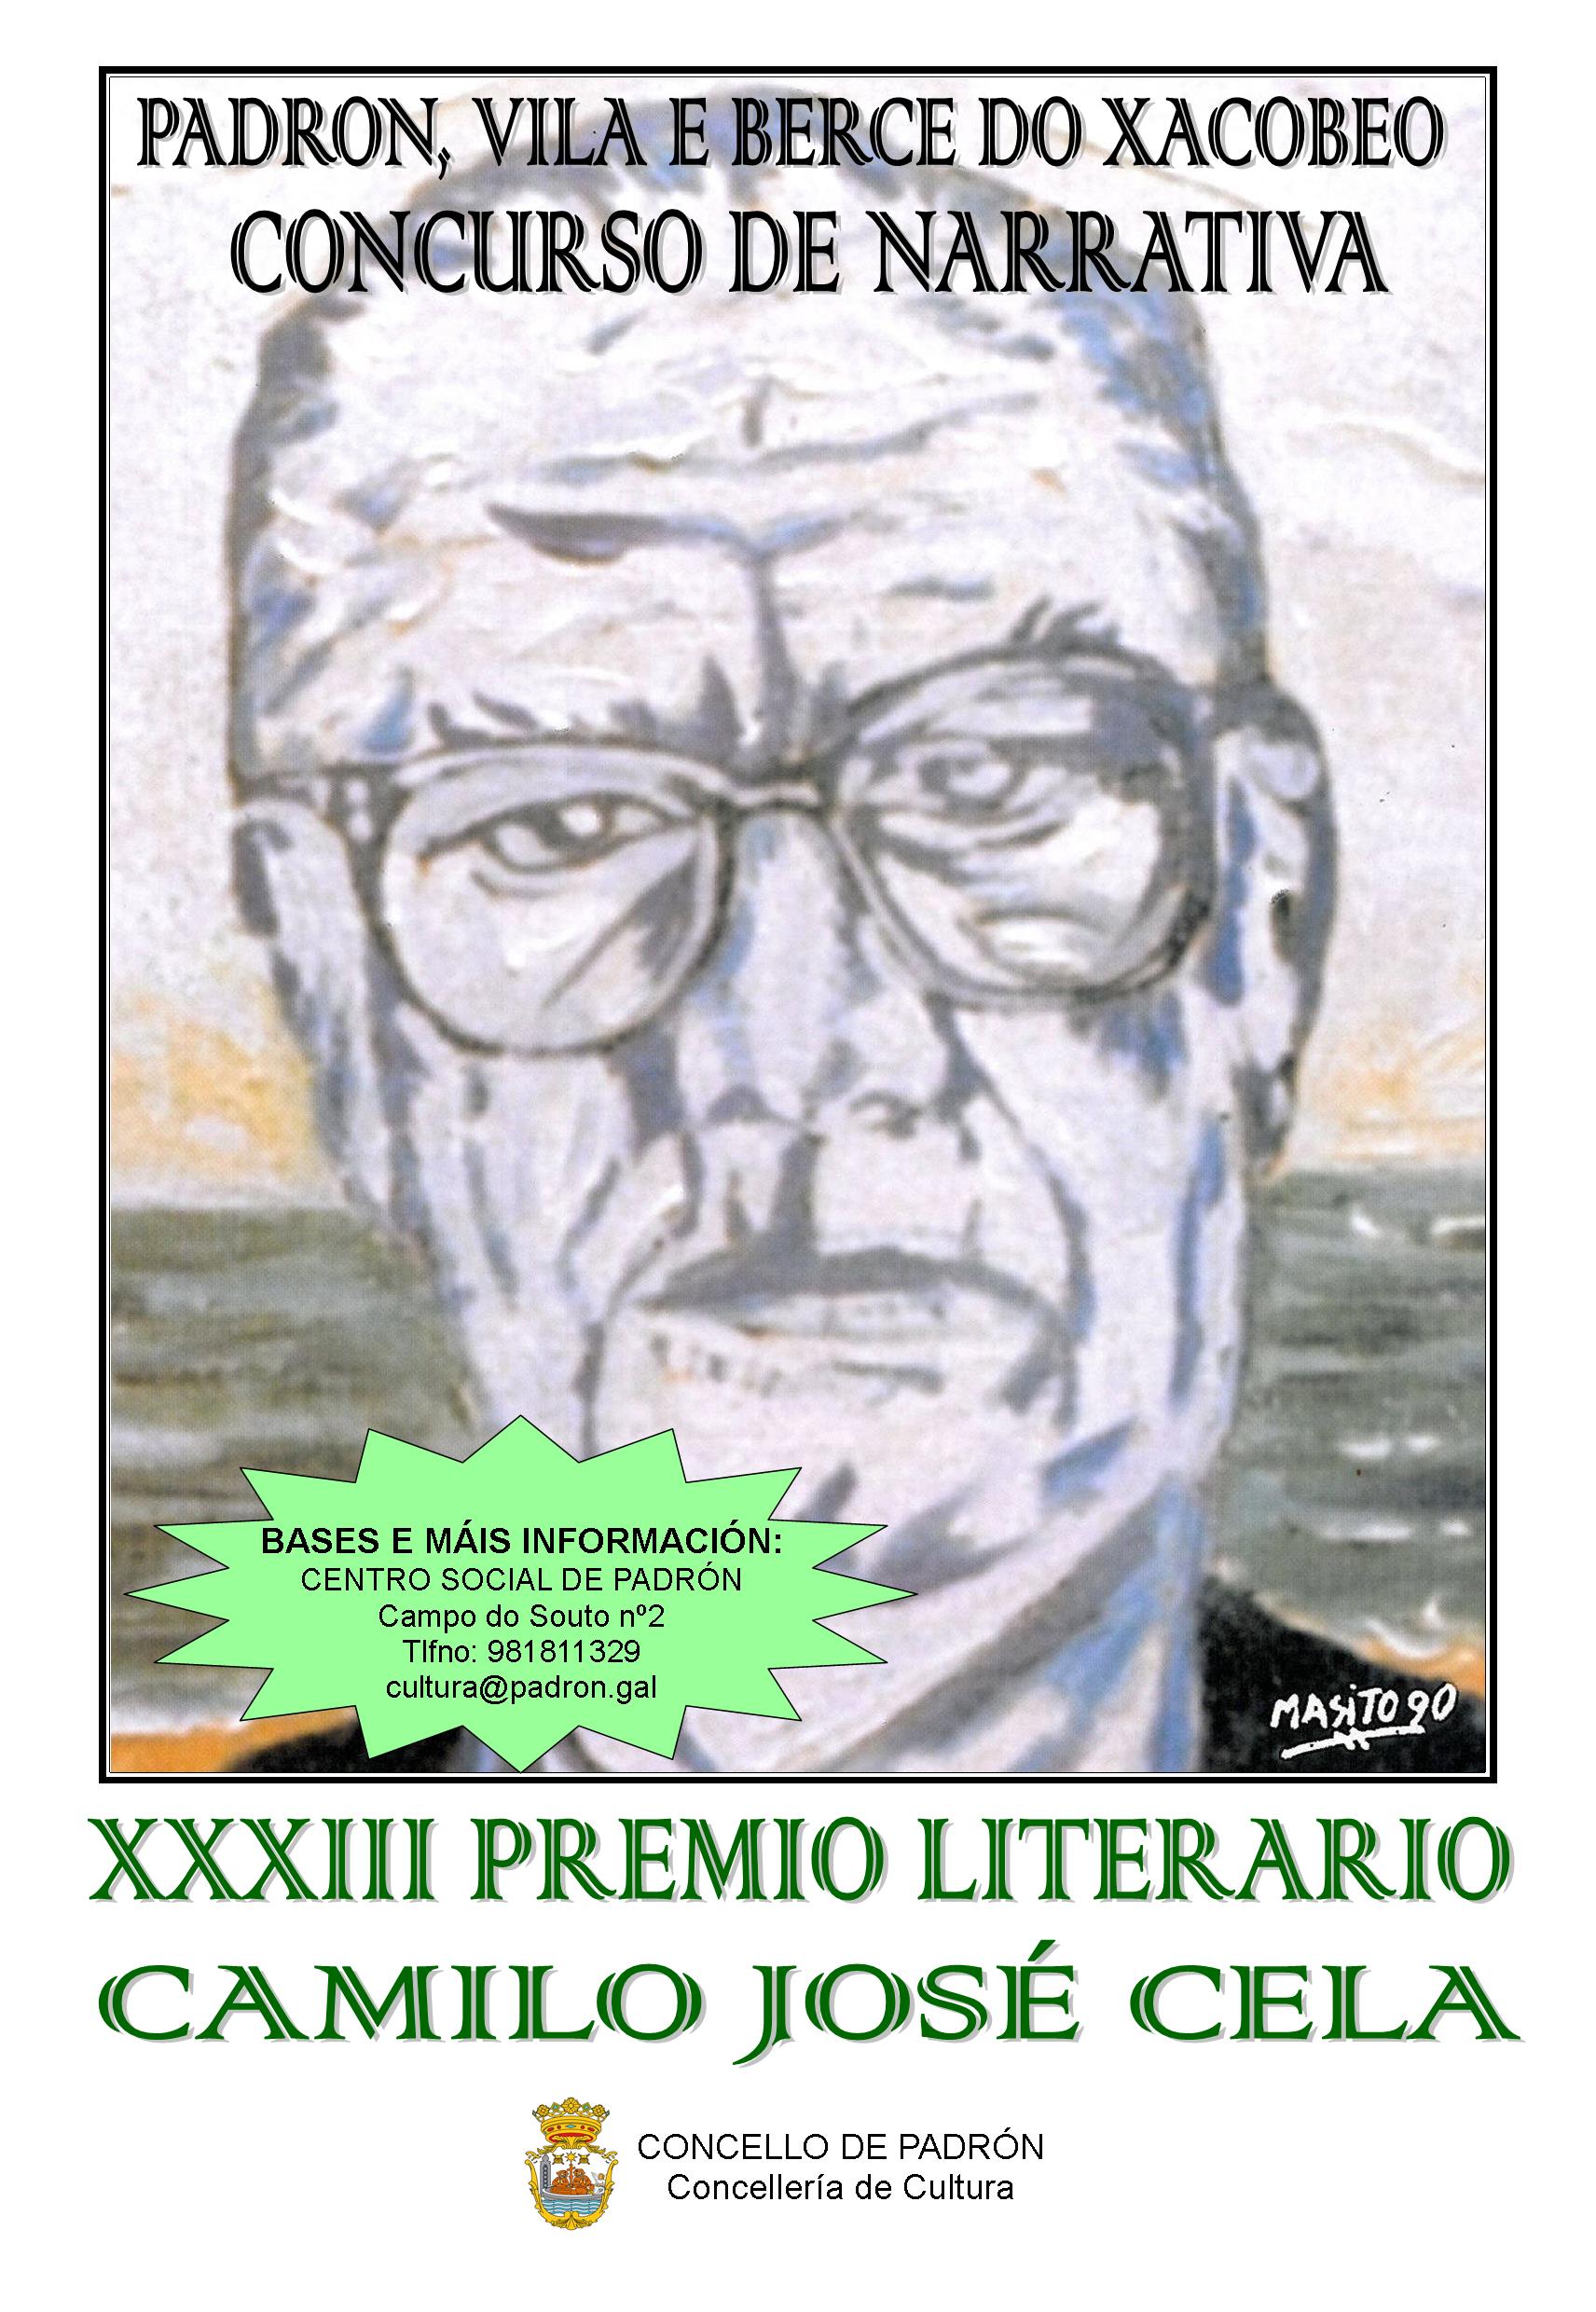 XXXIII Premio Literario Camilo José Cela